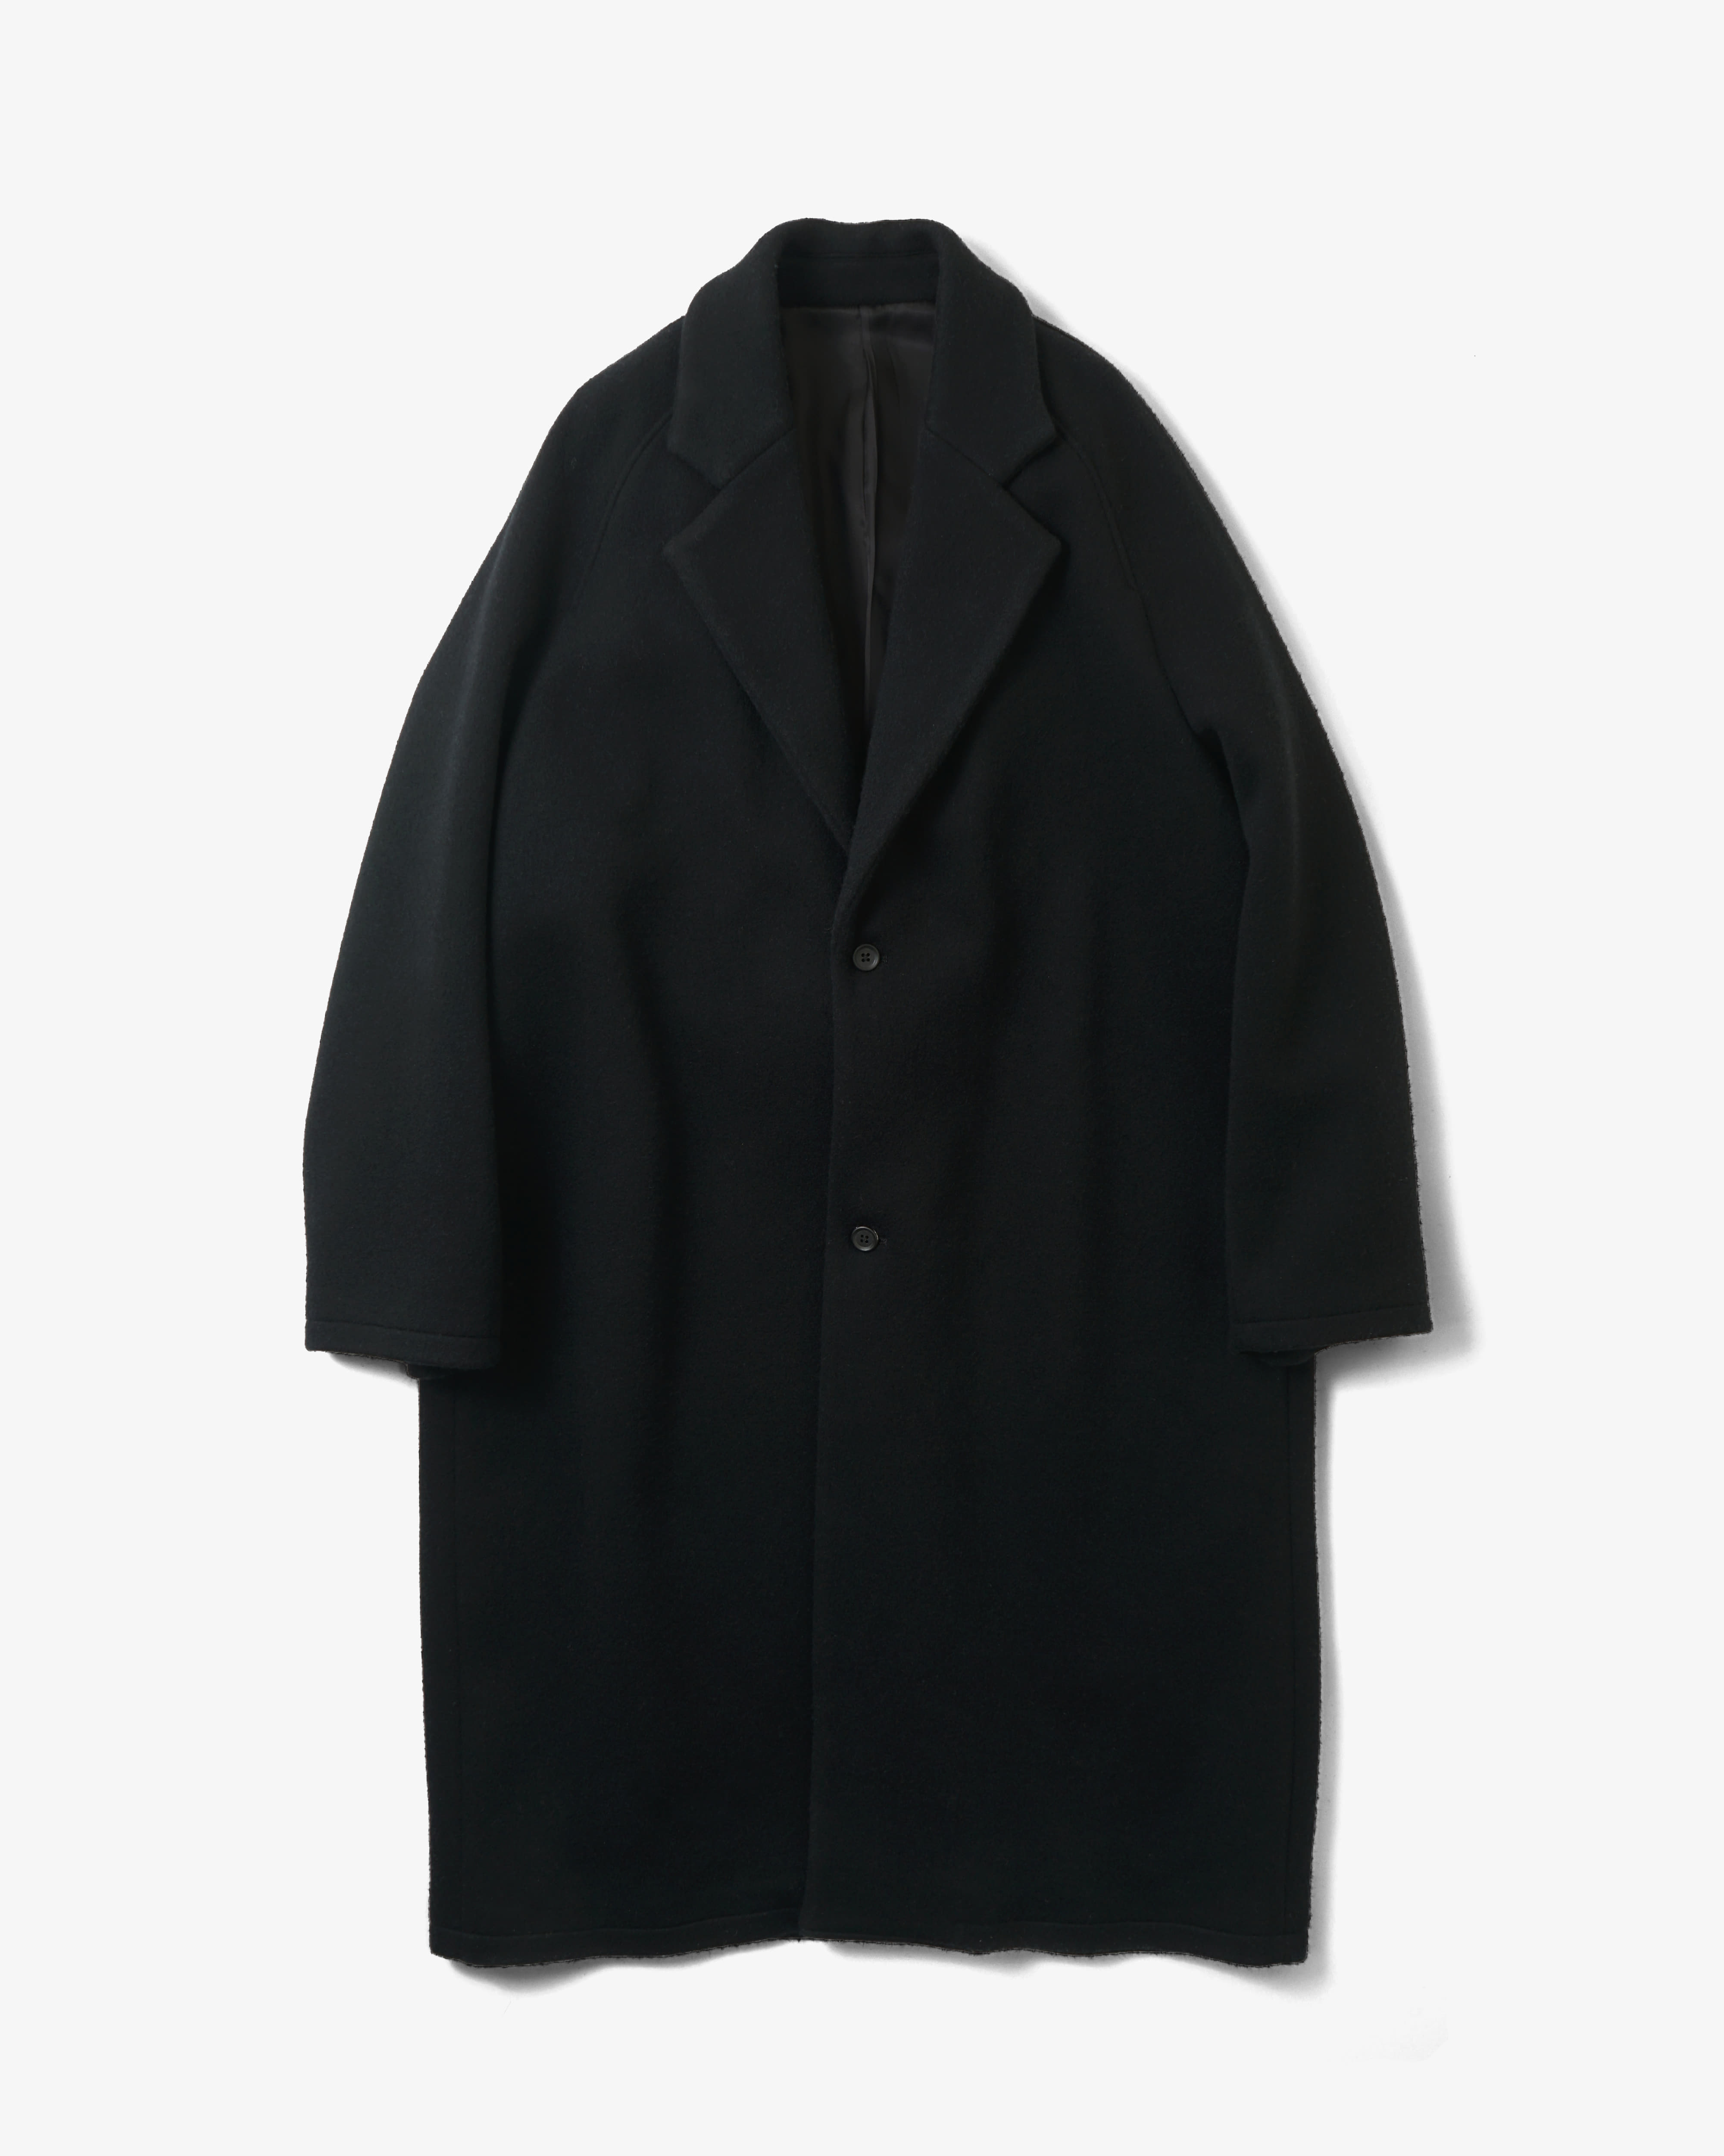 BEAVER DOUBLE CLOTH CHESTERFIELD COAT Black Name.(네임)